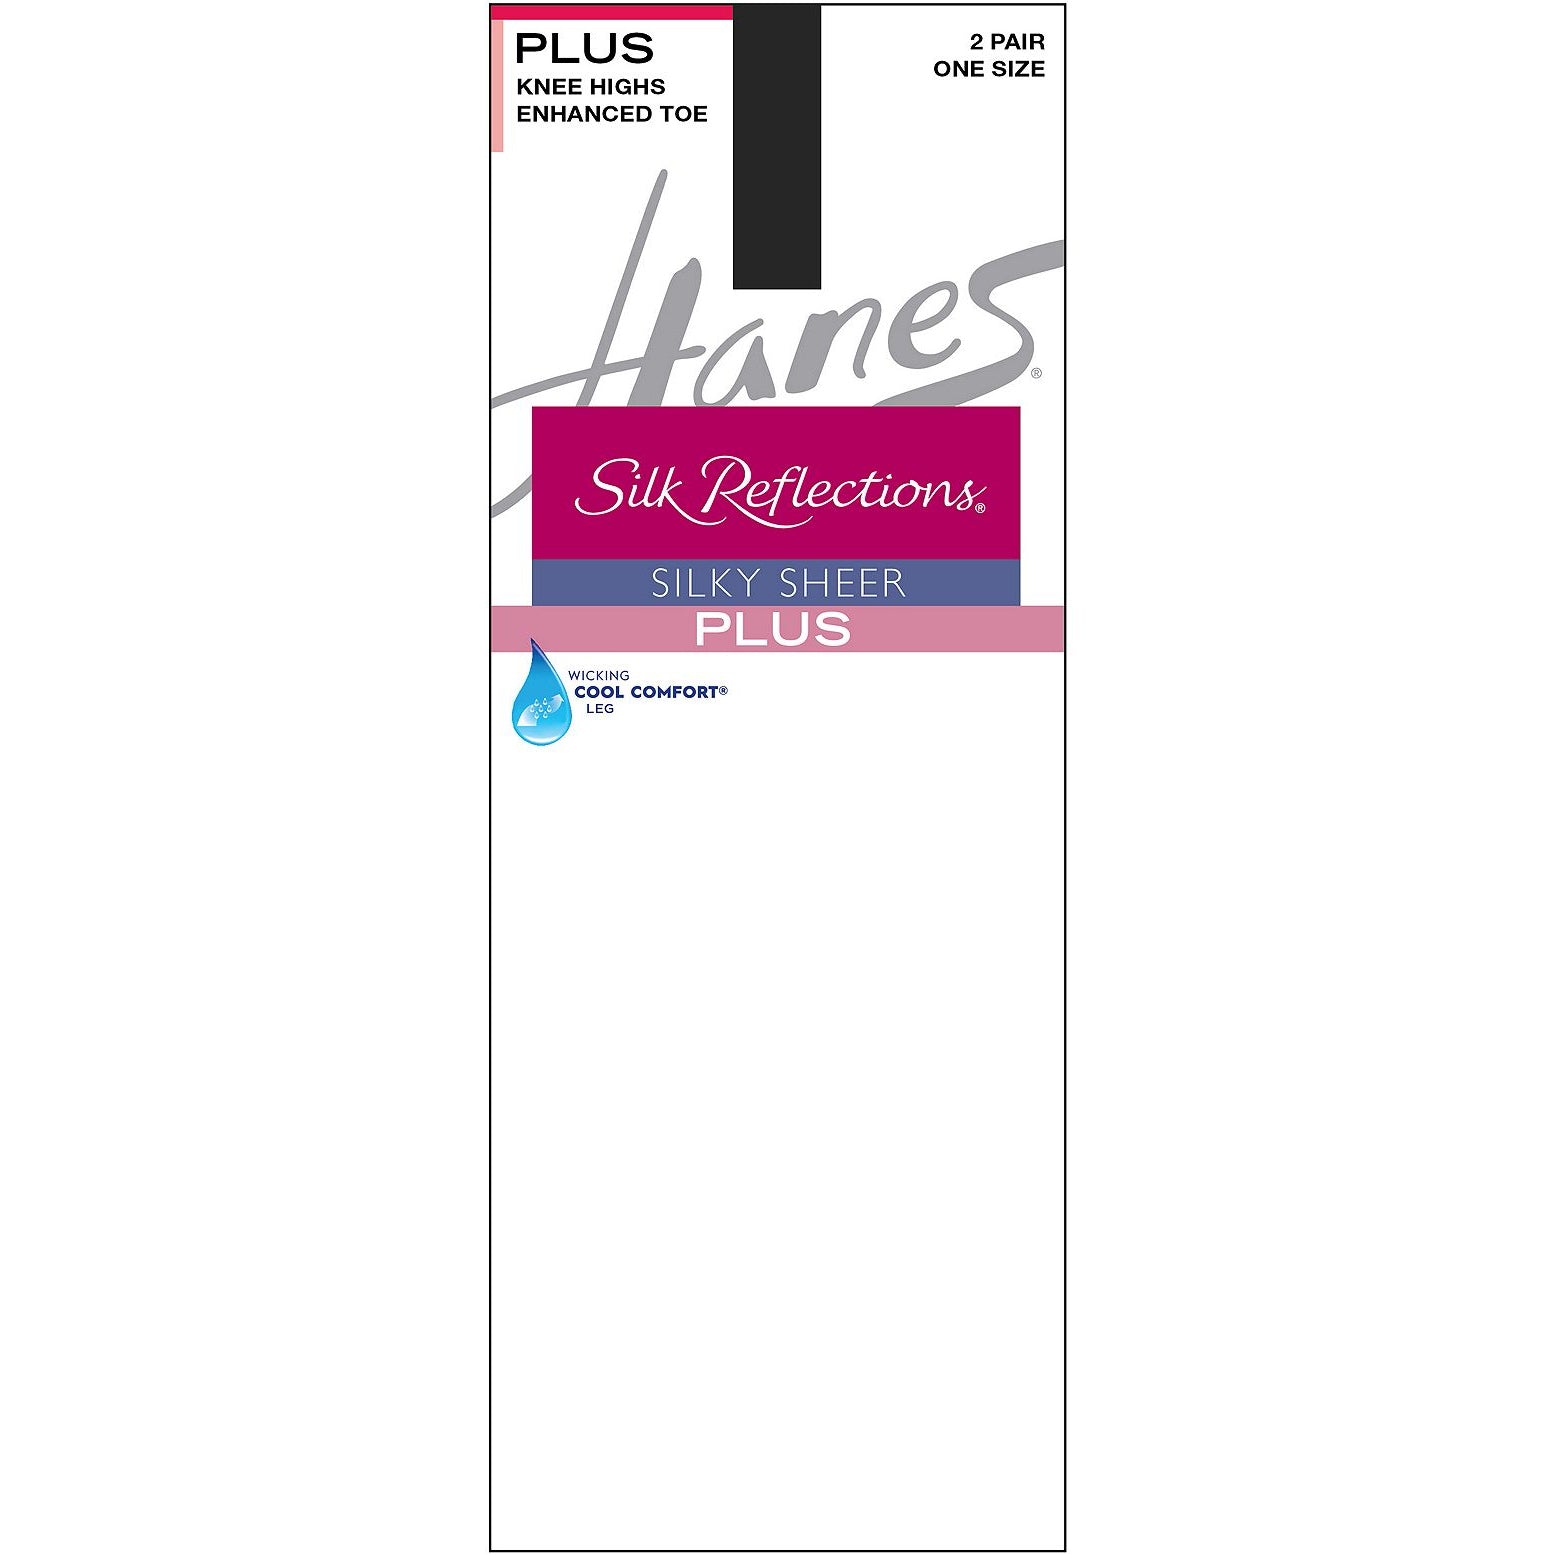 Hanes Silk Reflections Plus Knee Highs 00P19 2 pair pack – Good's